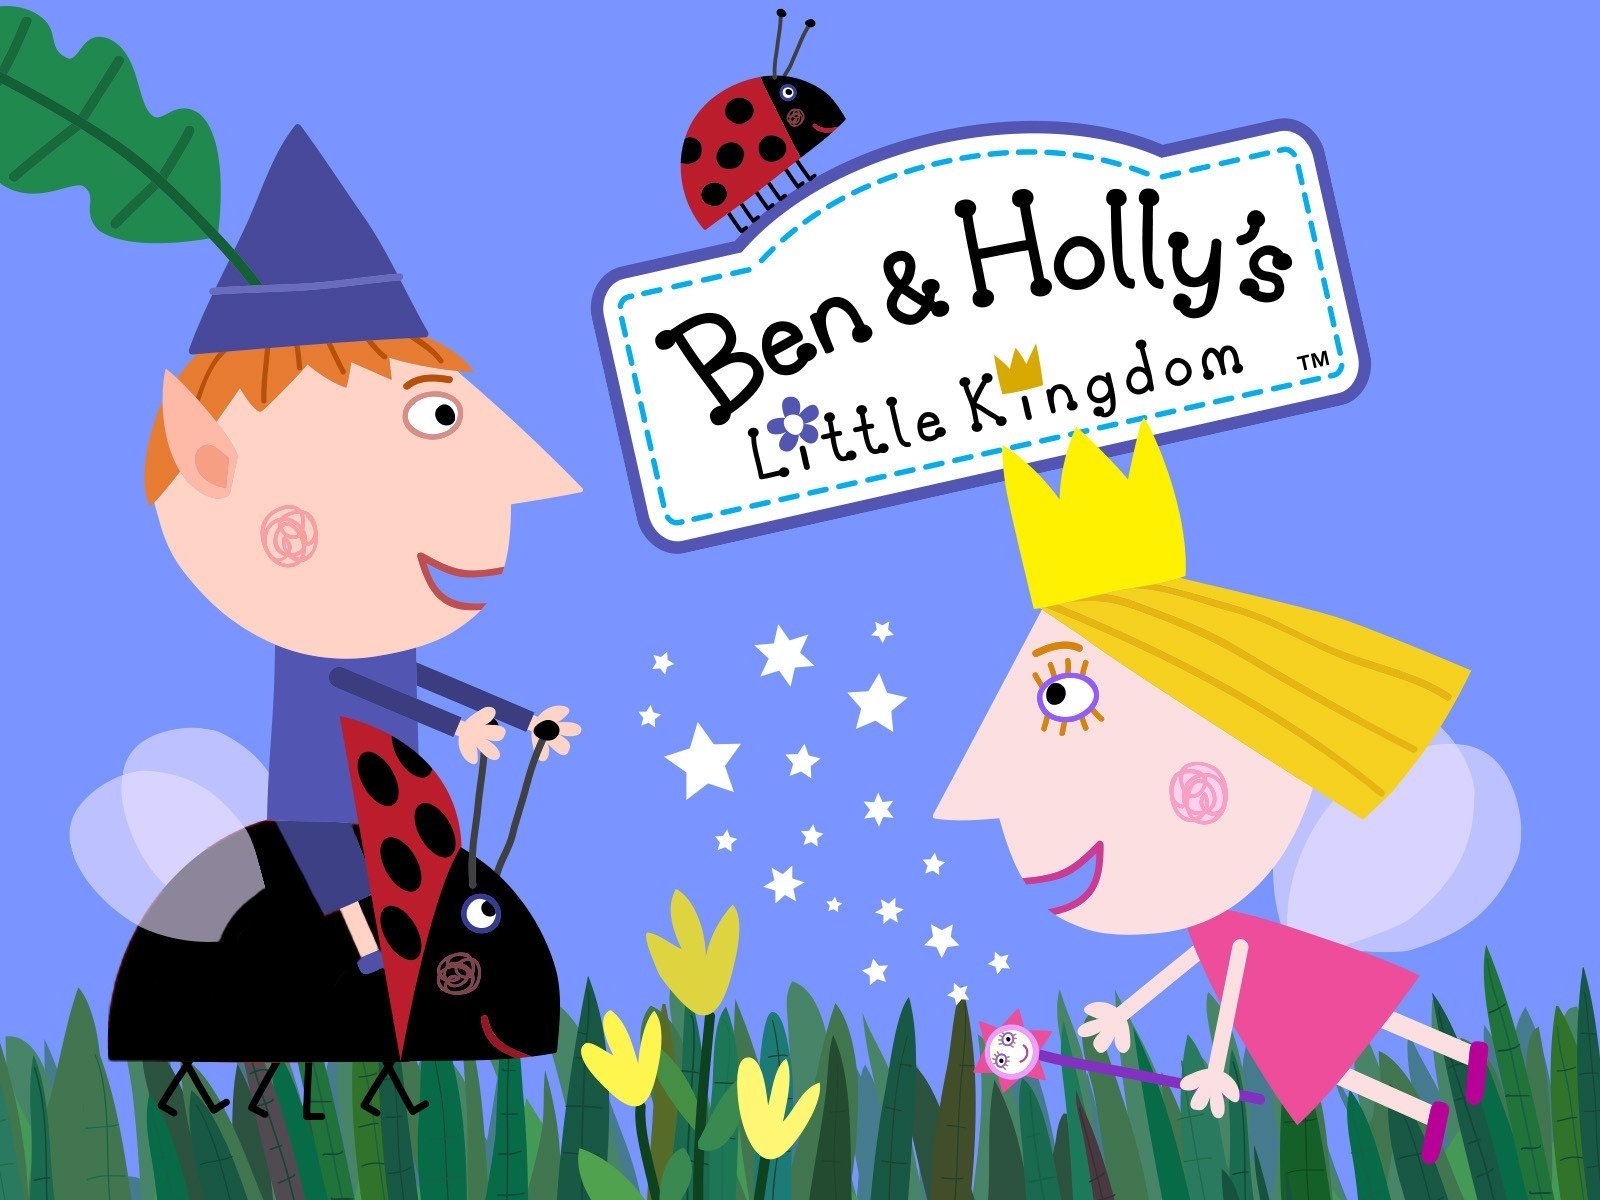 Holly s little kingdom. Маленькое королевст Бена и Хо. Маленькая королевство Бена и Холли. Холли маленькое королевство.